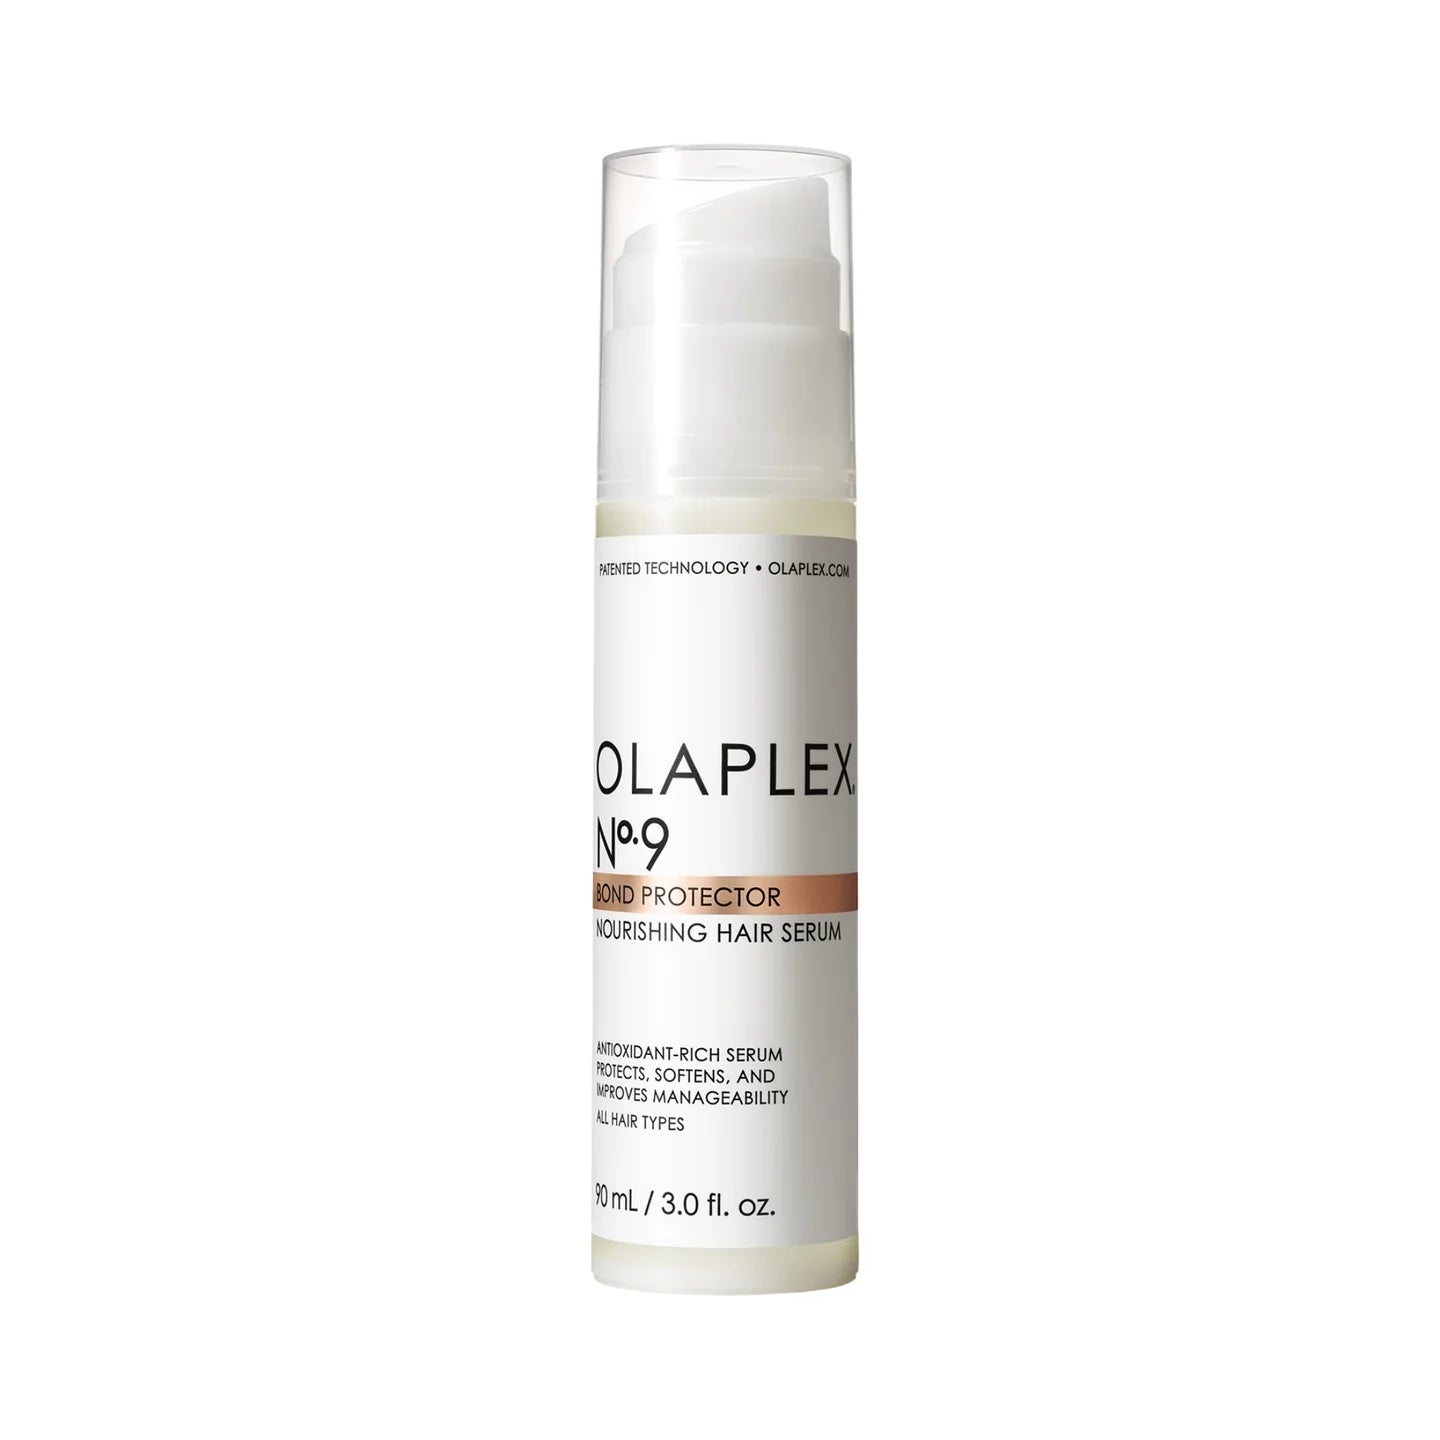 OLAPLEX Nº.9 - Bond Protector Nourishing Hair Serum